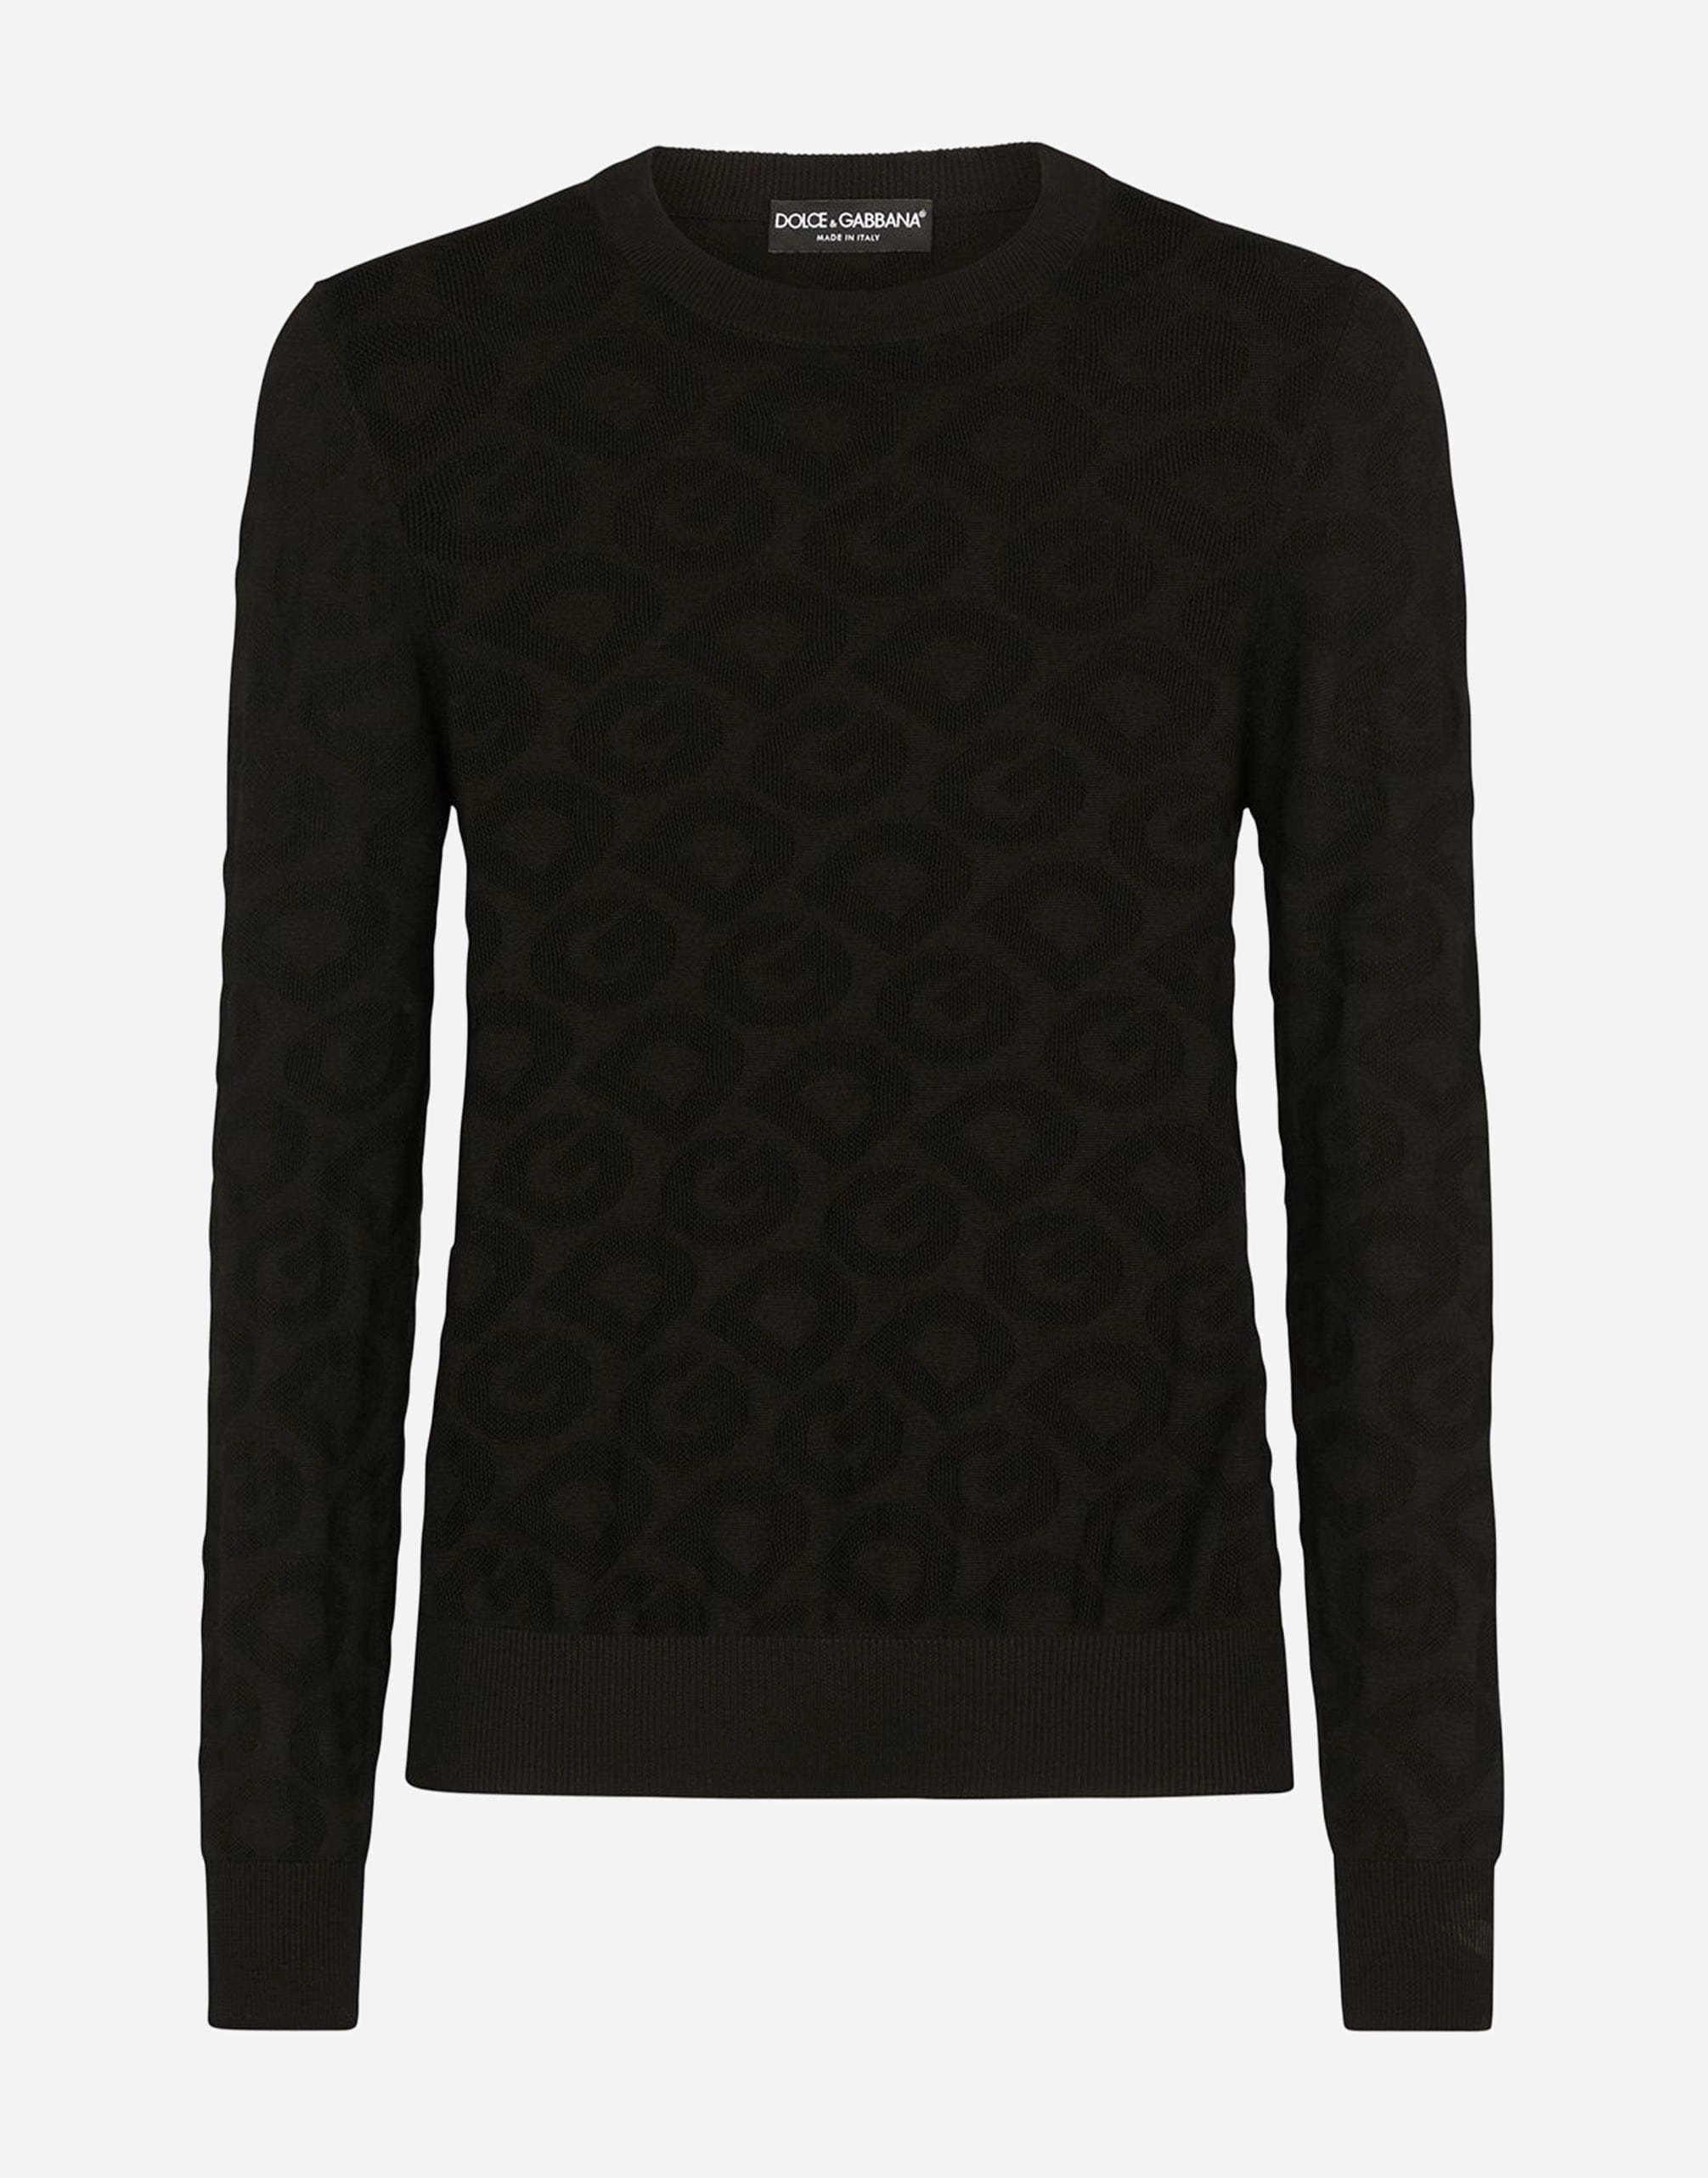 Dolce & Gabbana Logo-Intarsia Crewneck Sweater